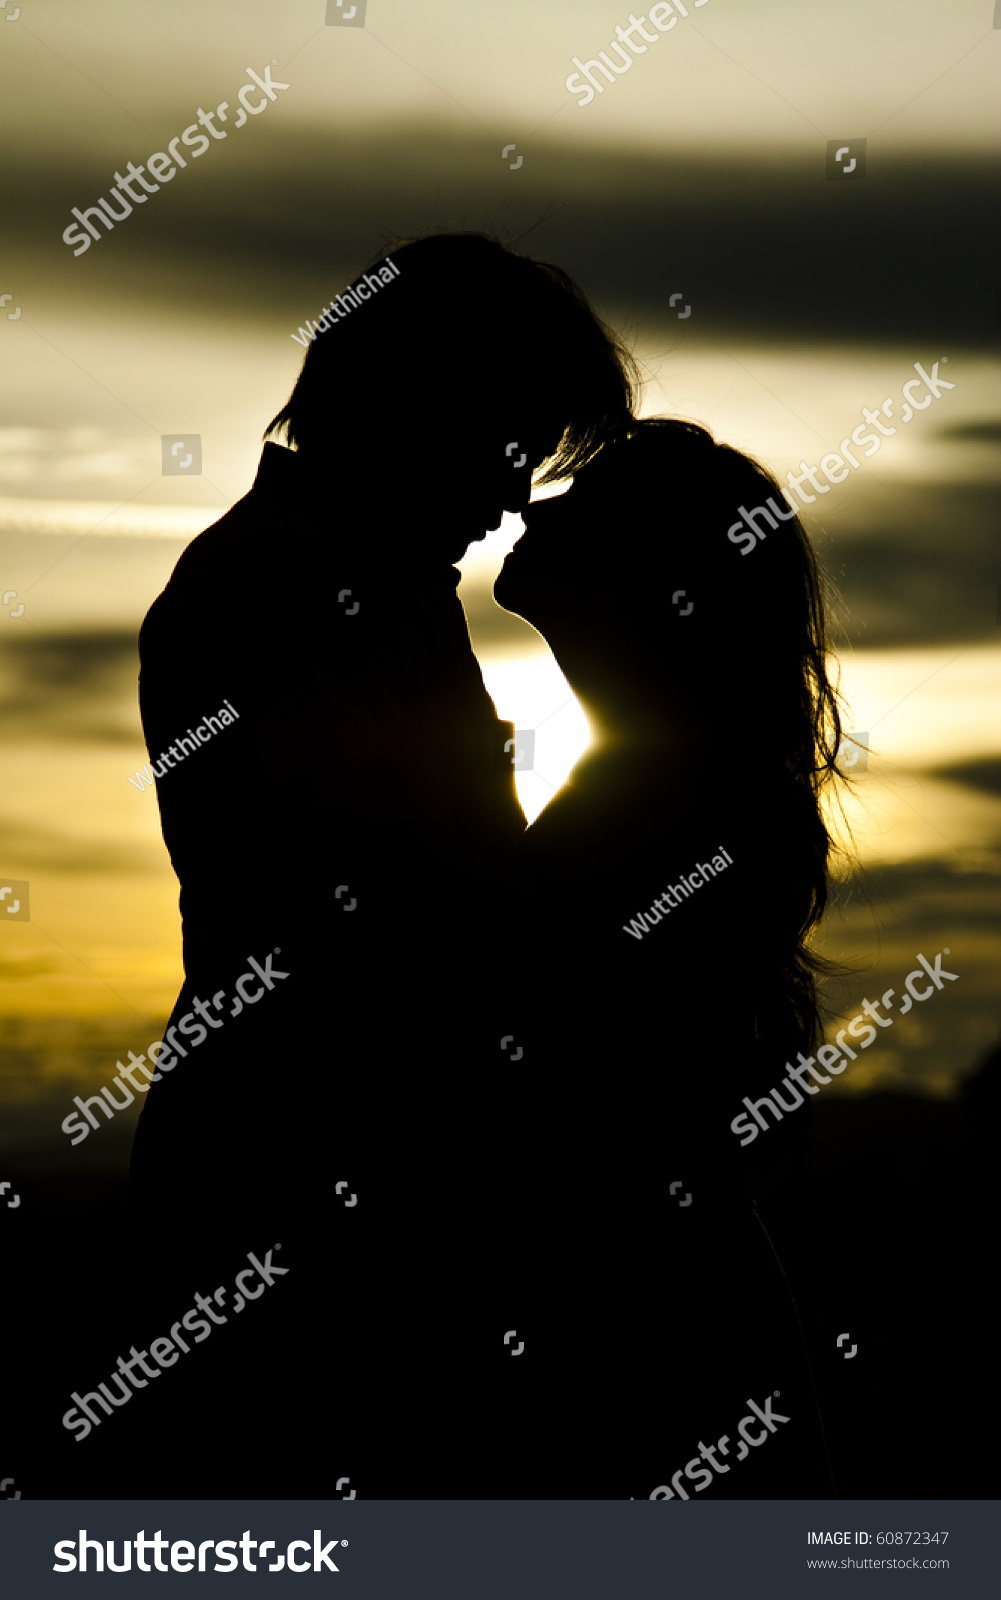 Silhouette Loving Couple Stock Photo 60872347 - Shutterstock